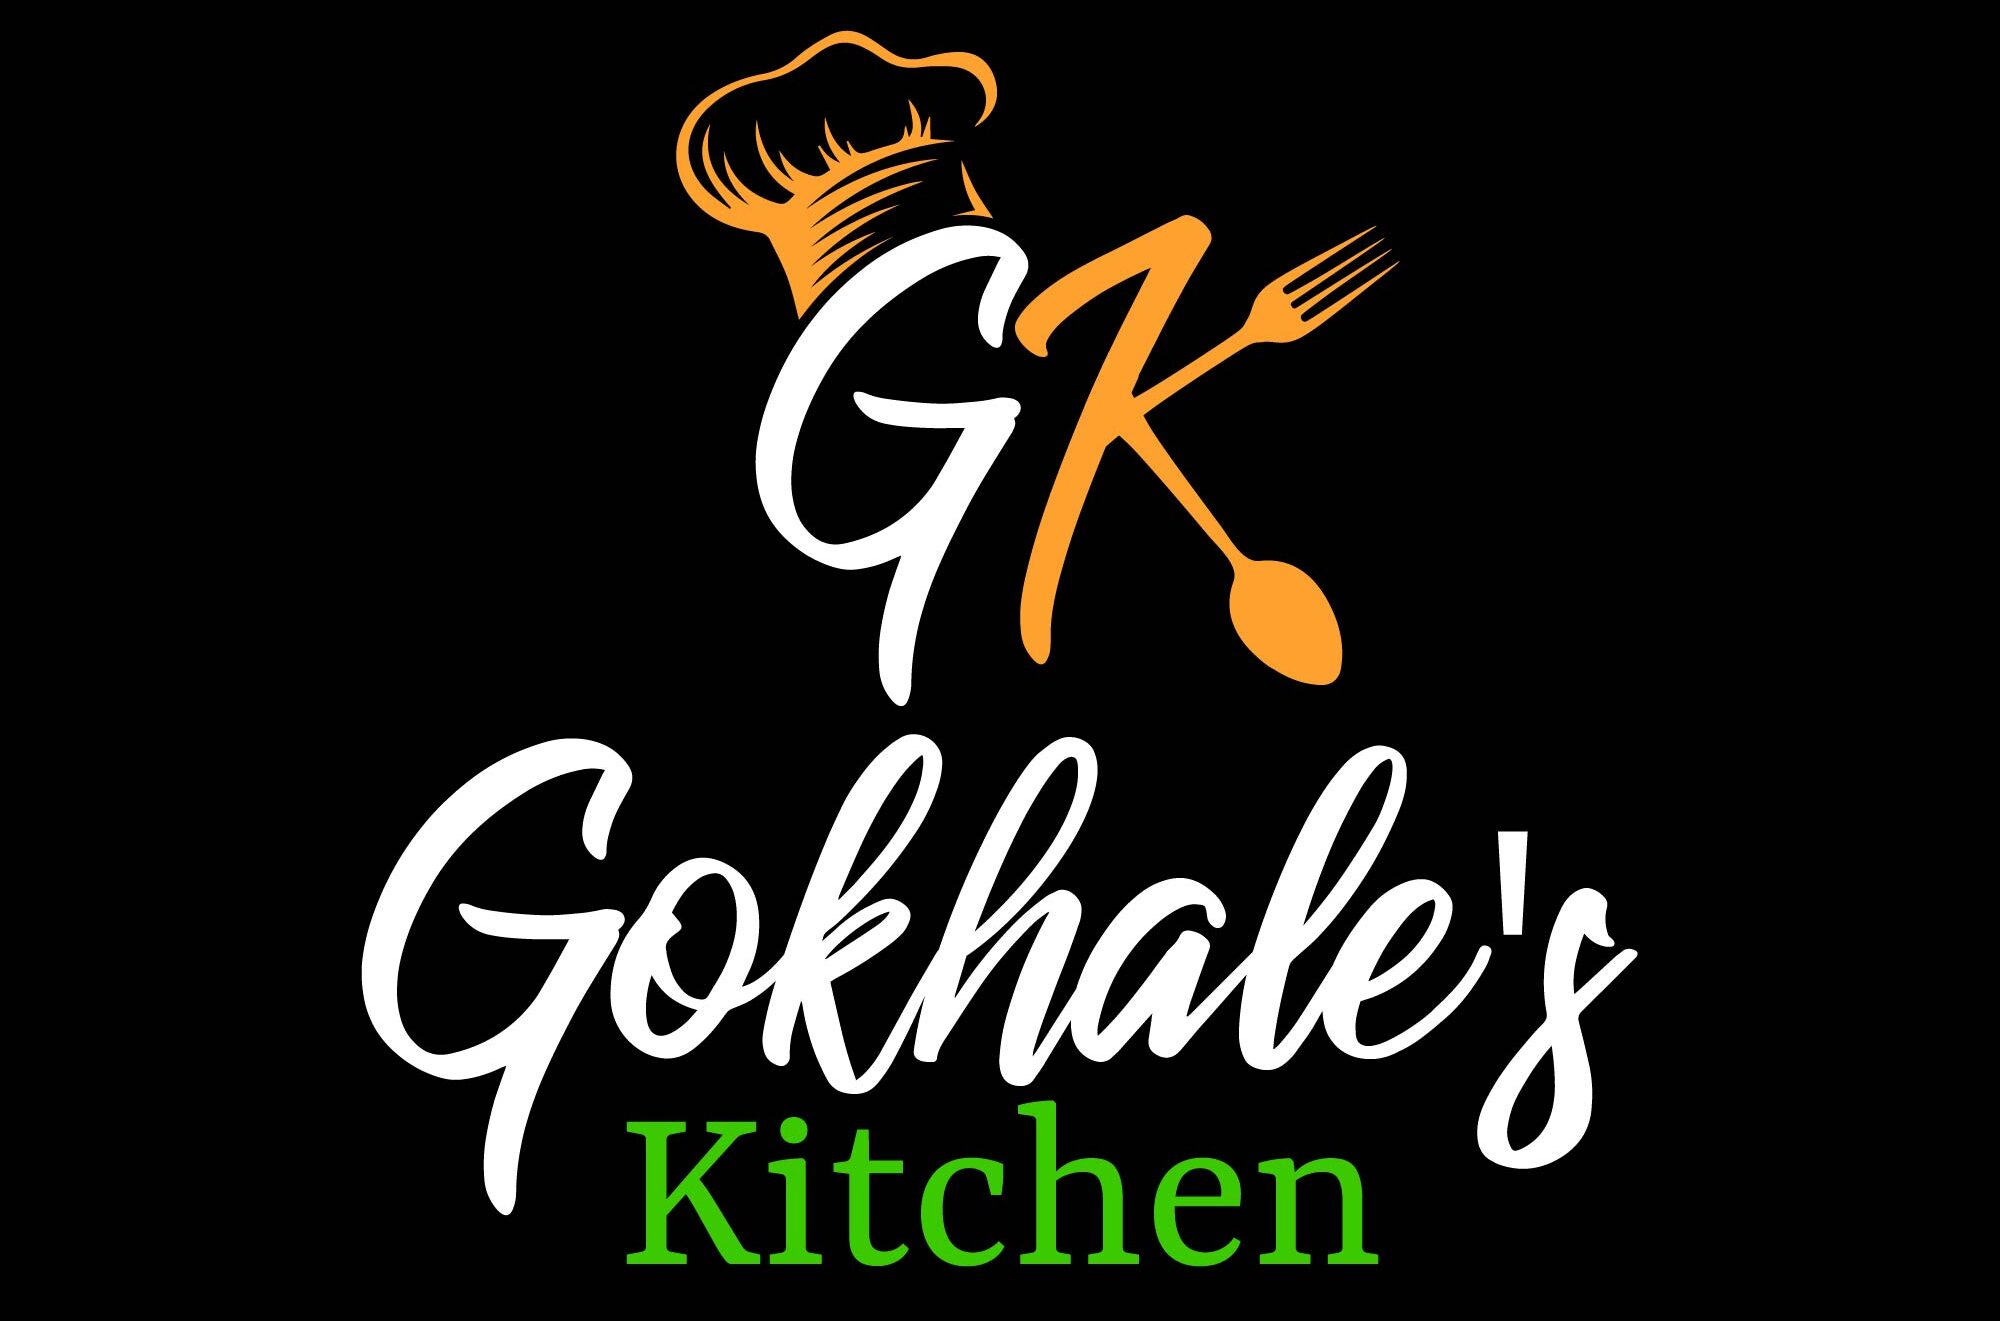 Gokhale's Kitchen